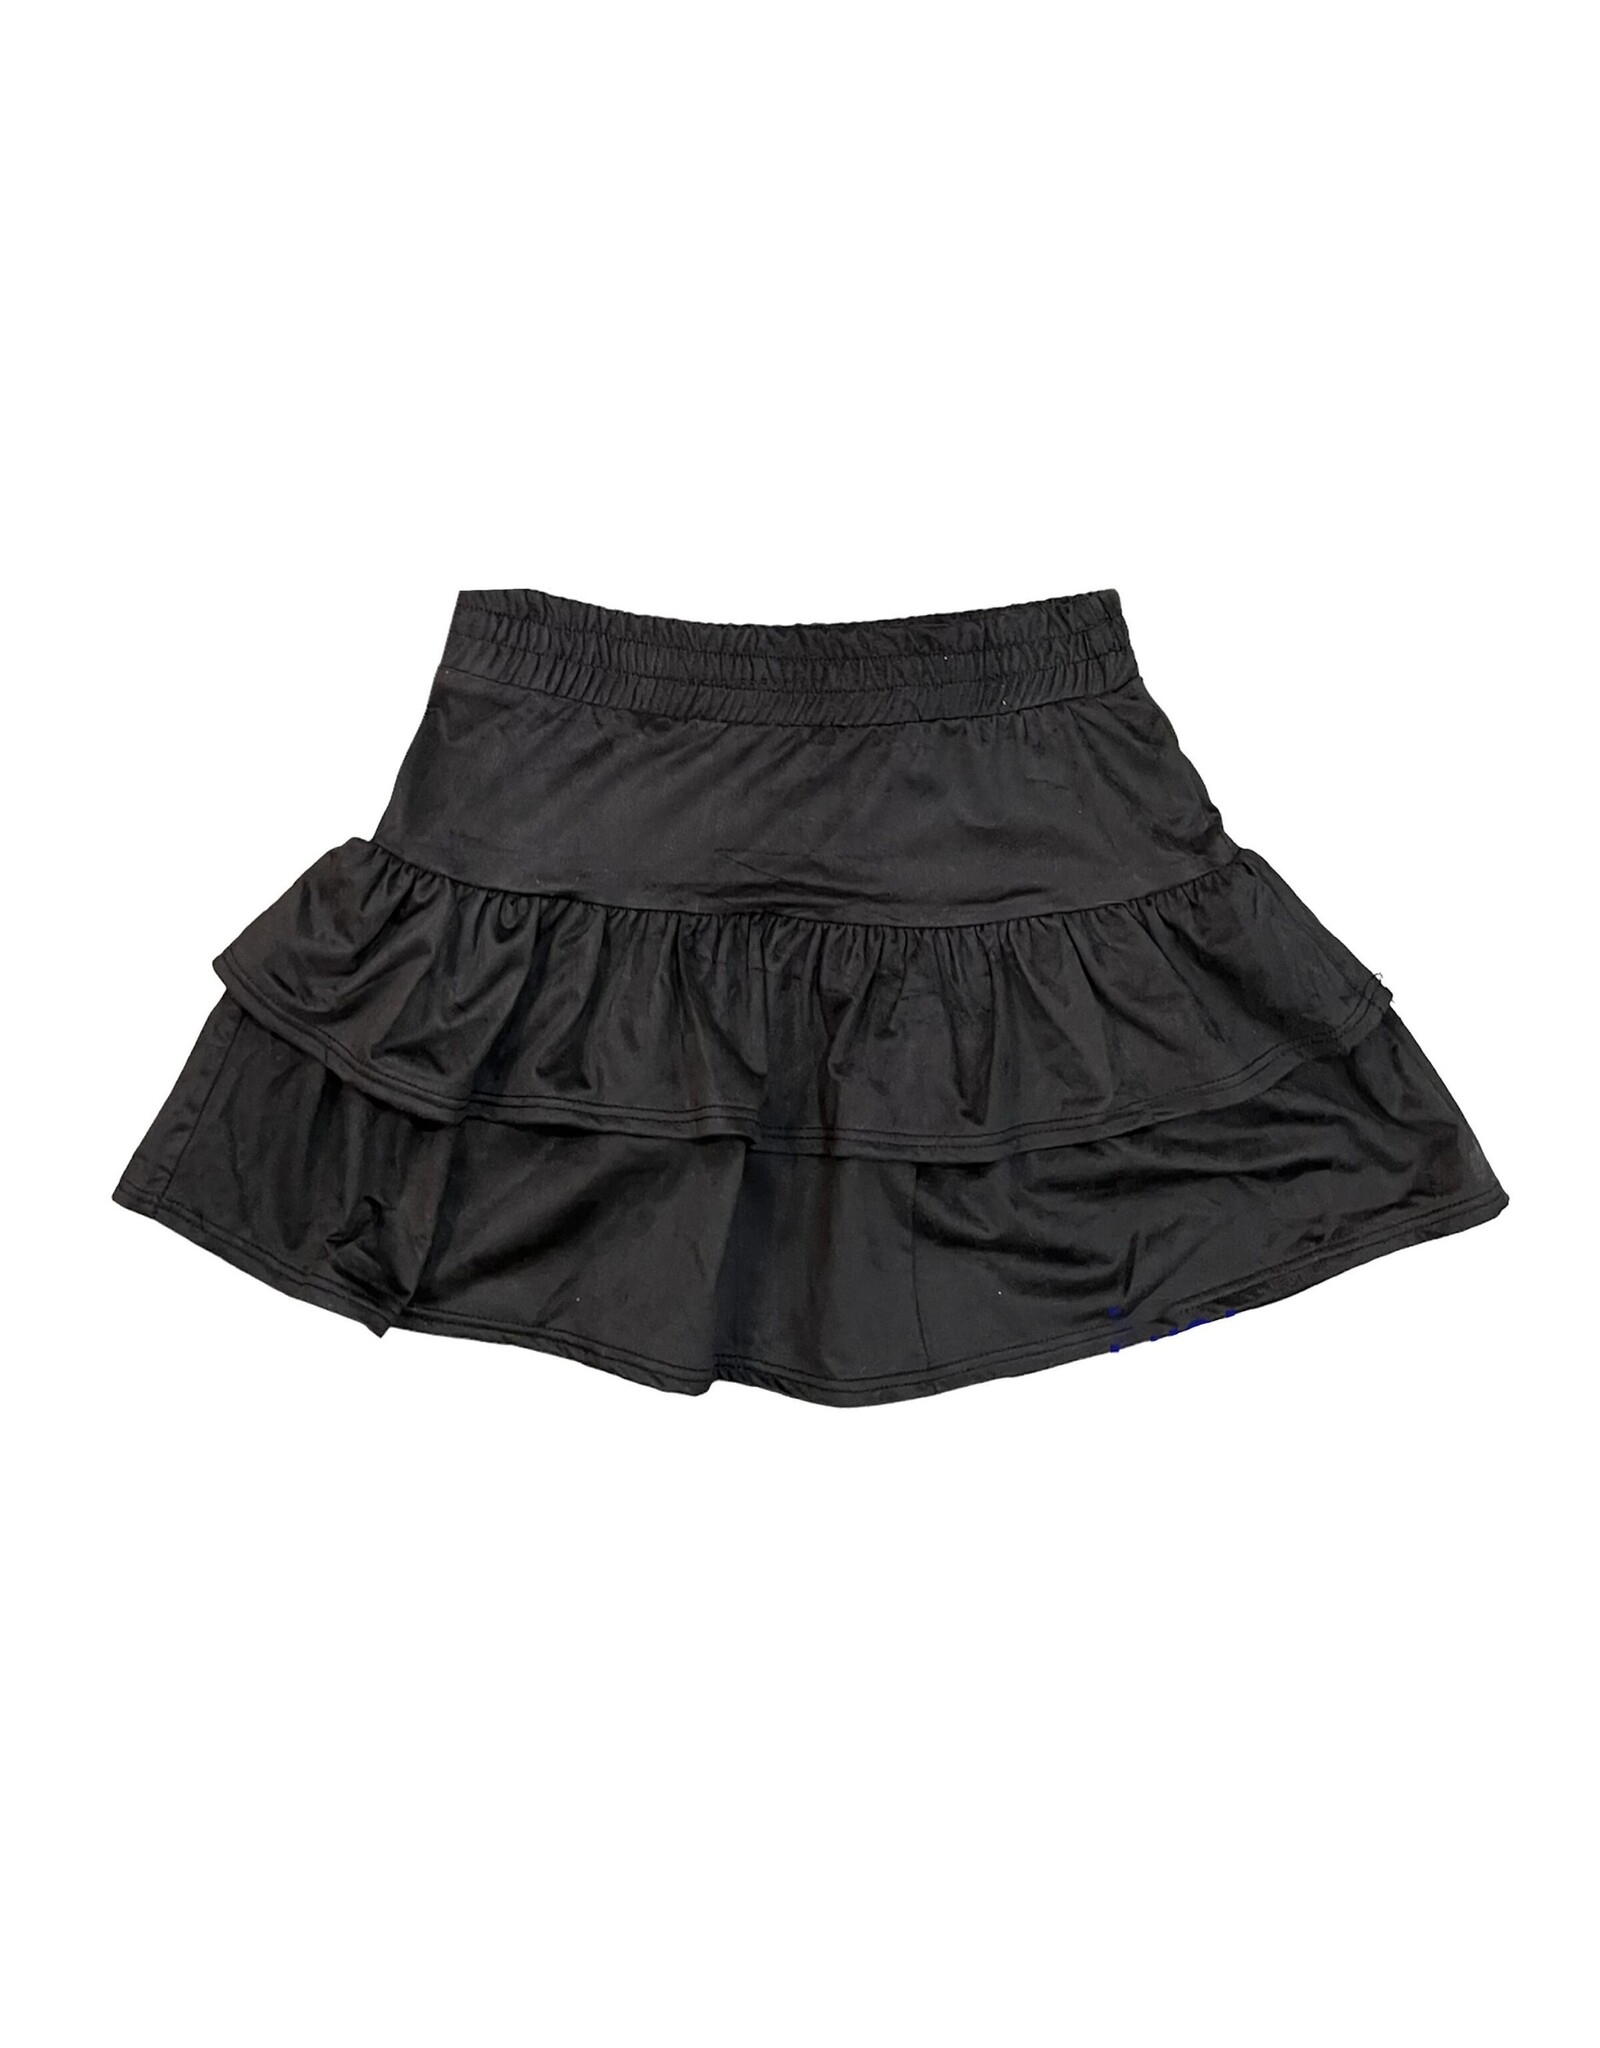 Tweenstyle TS Girls Micro Suede Tiered Skirt